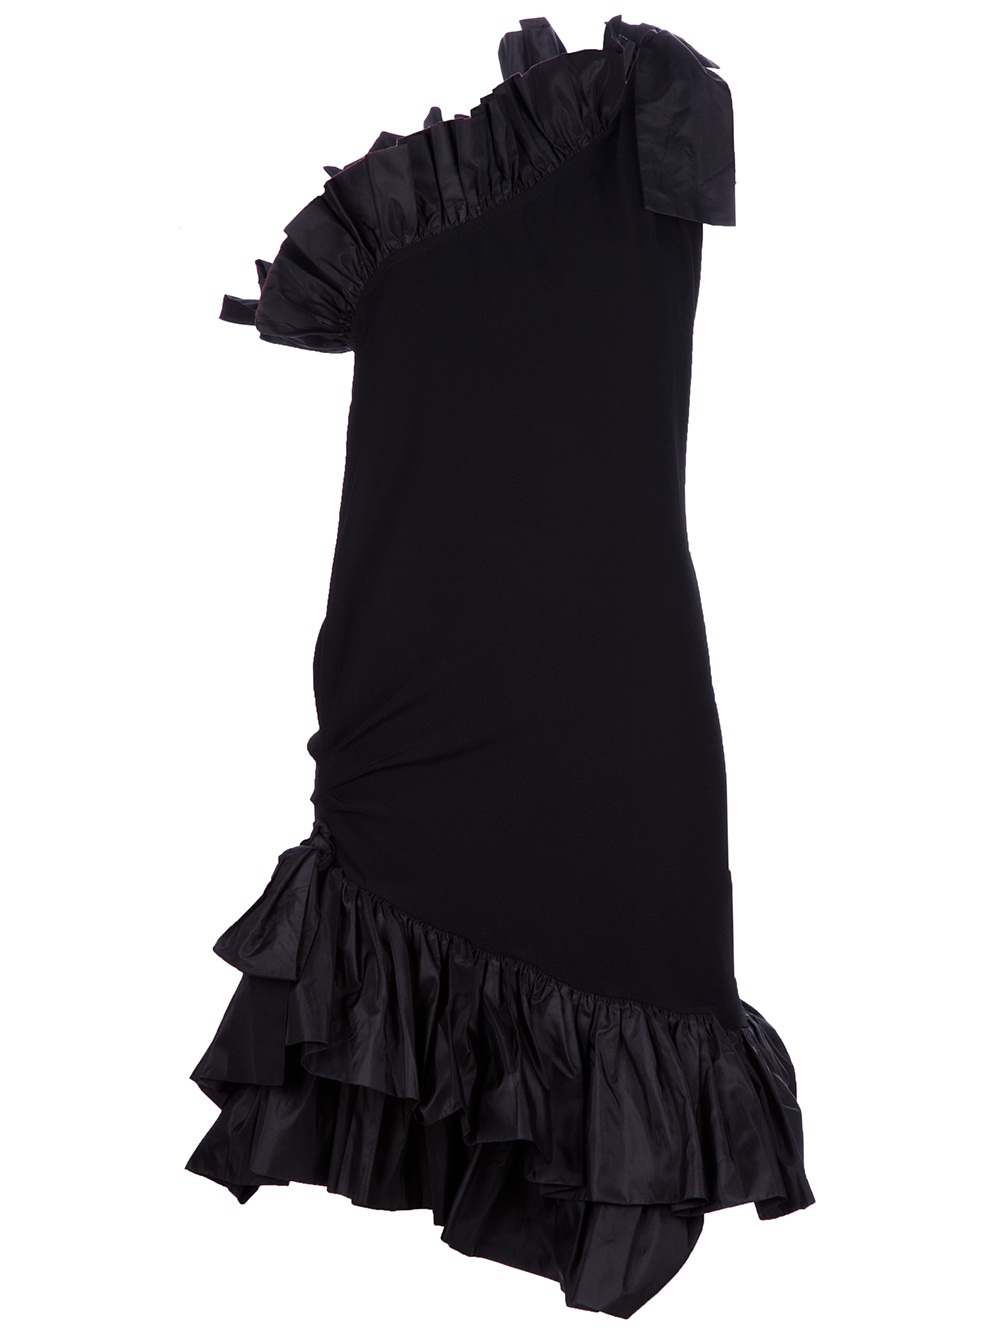 Yves Saint Laurent Vintage Dress in Black | Lyst